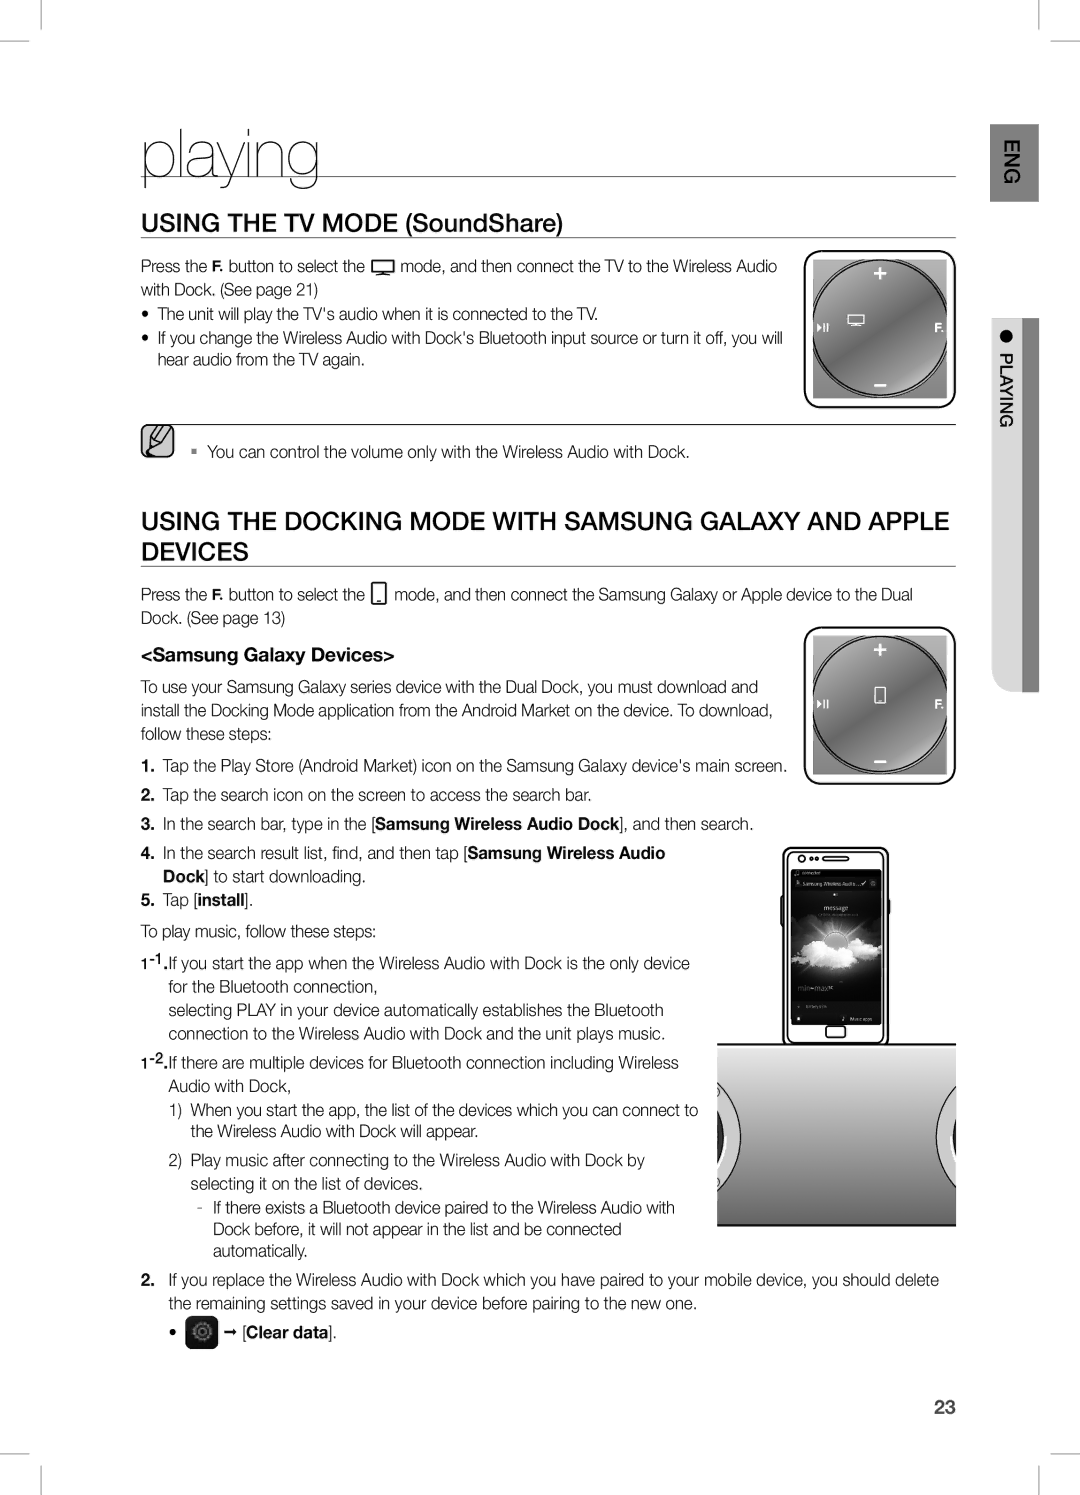 Samsung DAE670ZA, DA-E670 user manual Playing, Using the TV Mode SoundShare, Samsung Galaxy Devices, Ingaypl 